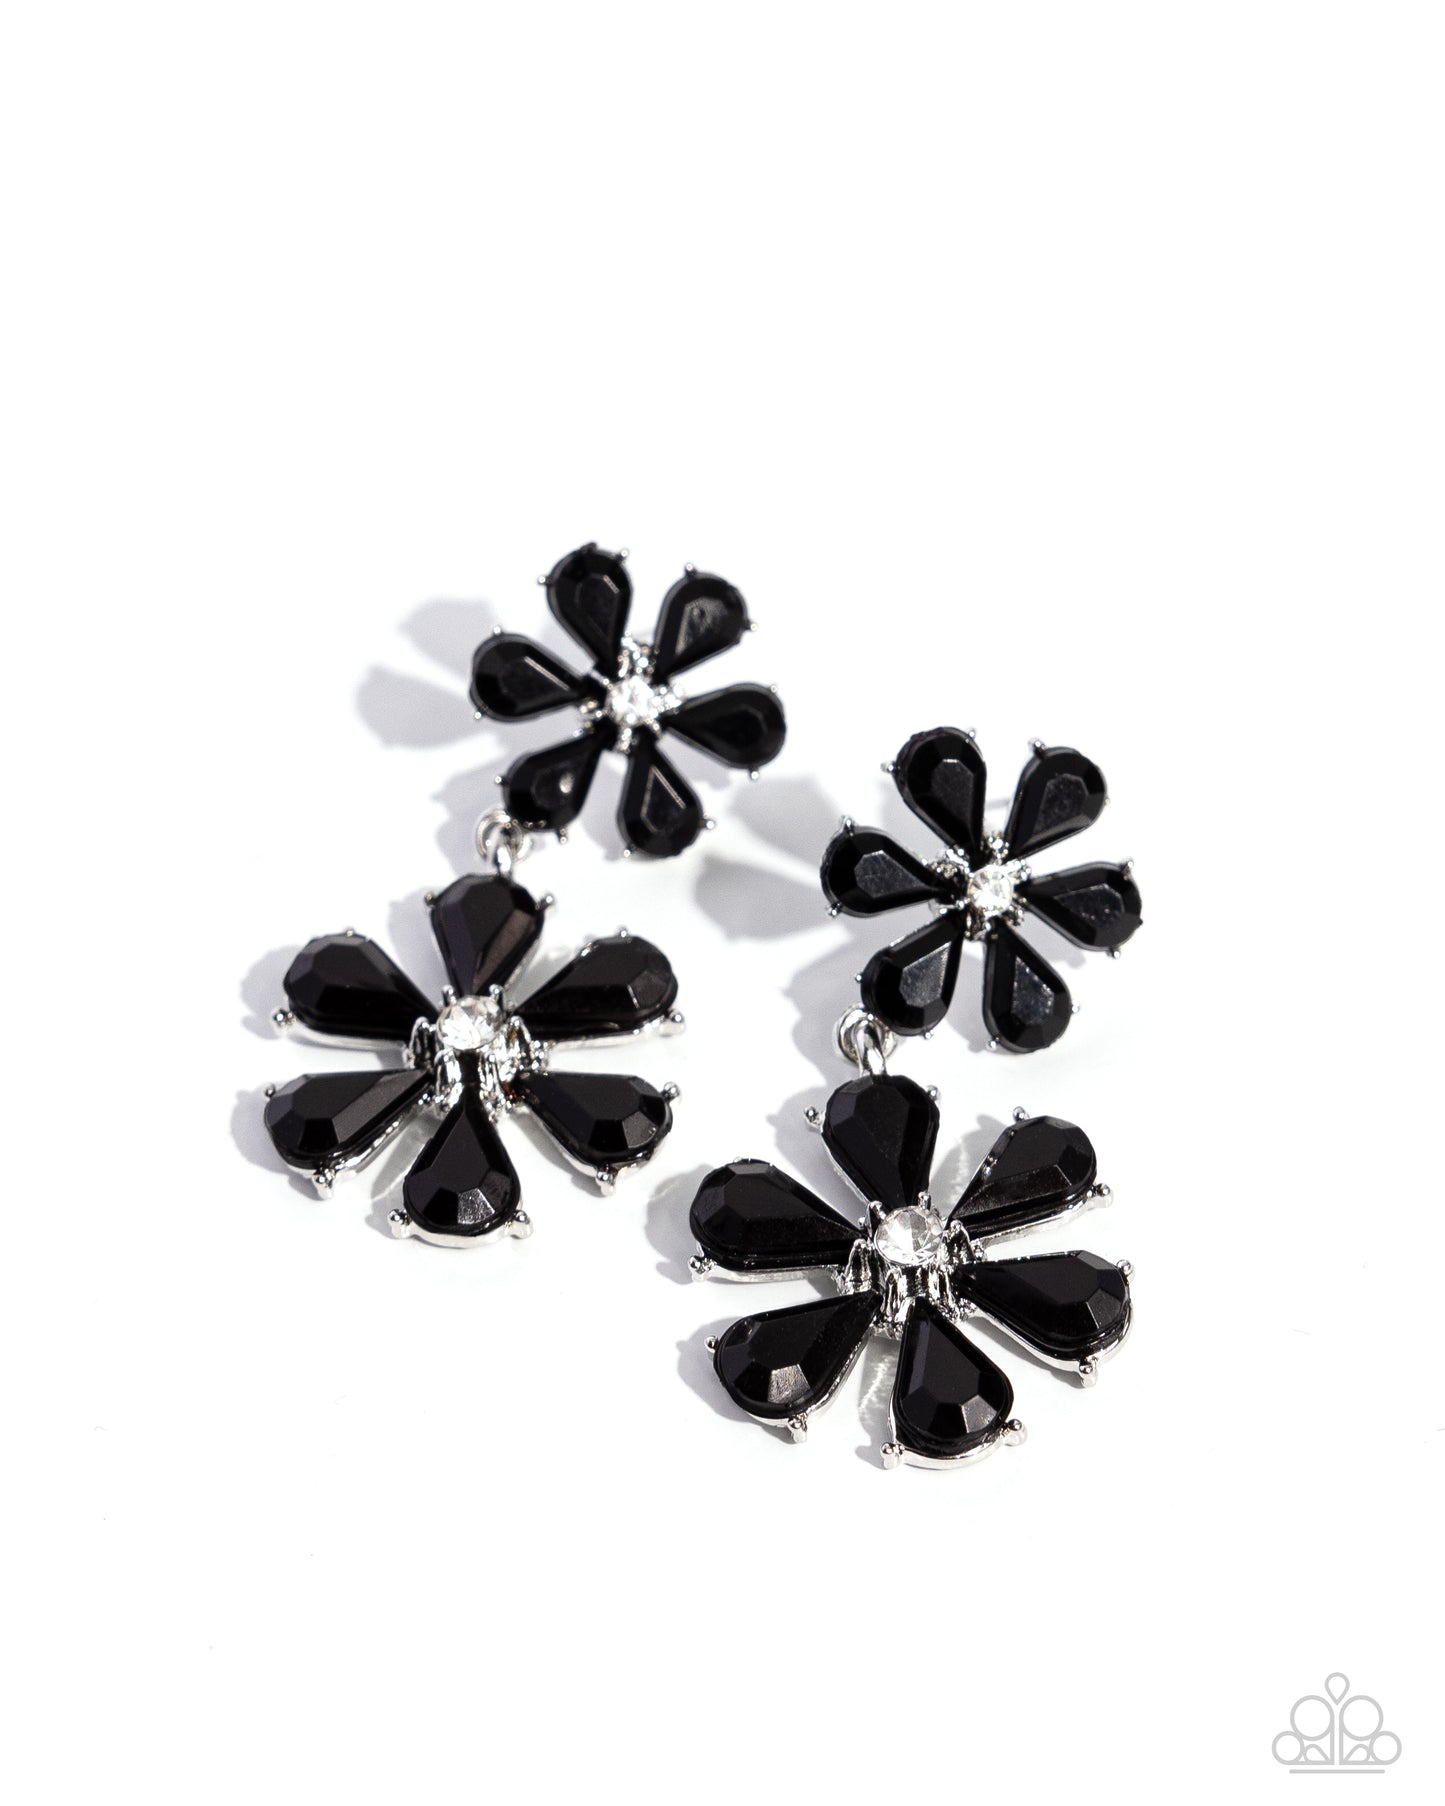 Floral Fun Black Flower Necklace & Bracelet Set - Paparazzi Accessories SKU: P2ST-BKXX-237XK SKU: P5PO-BKXX-240XK